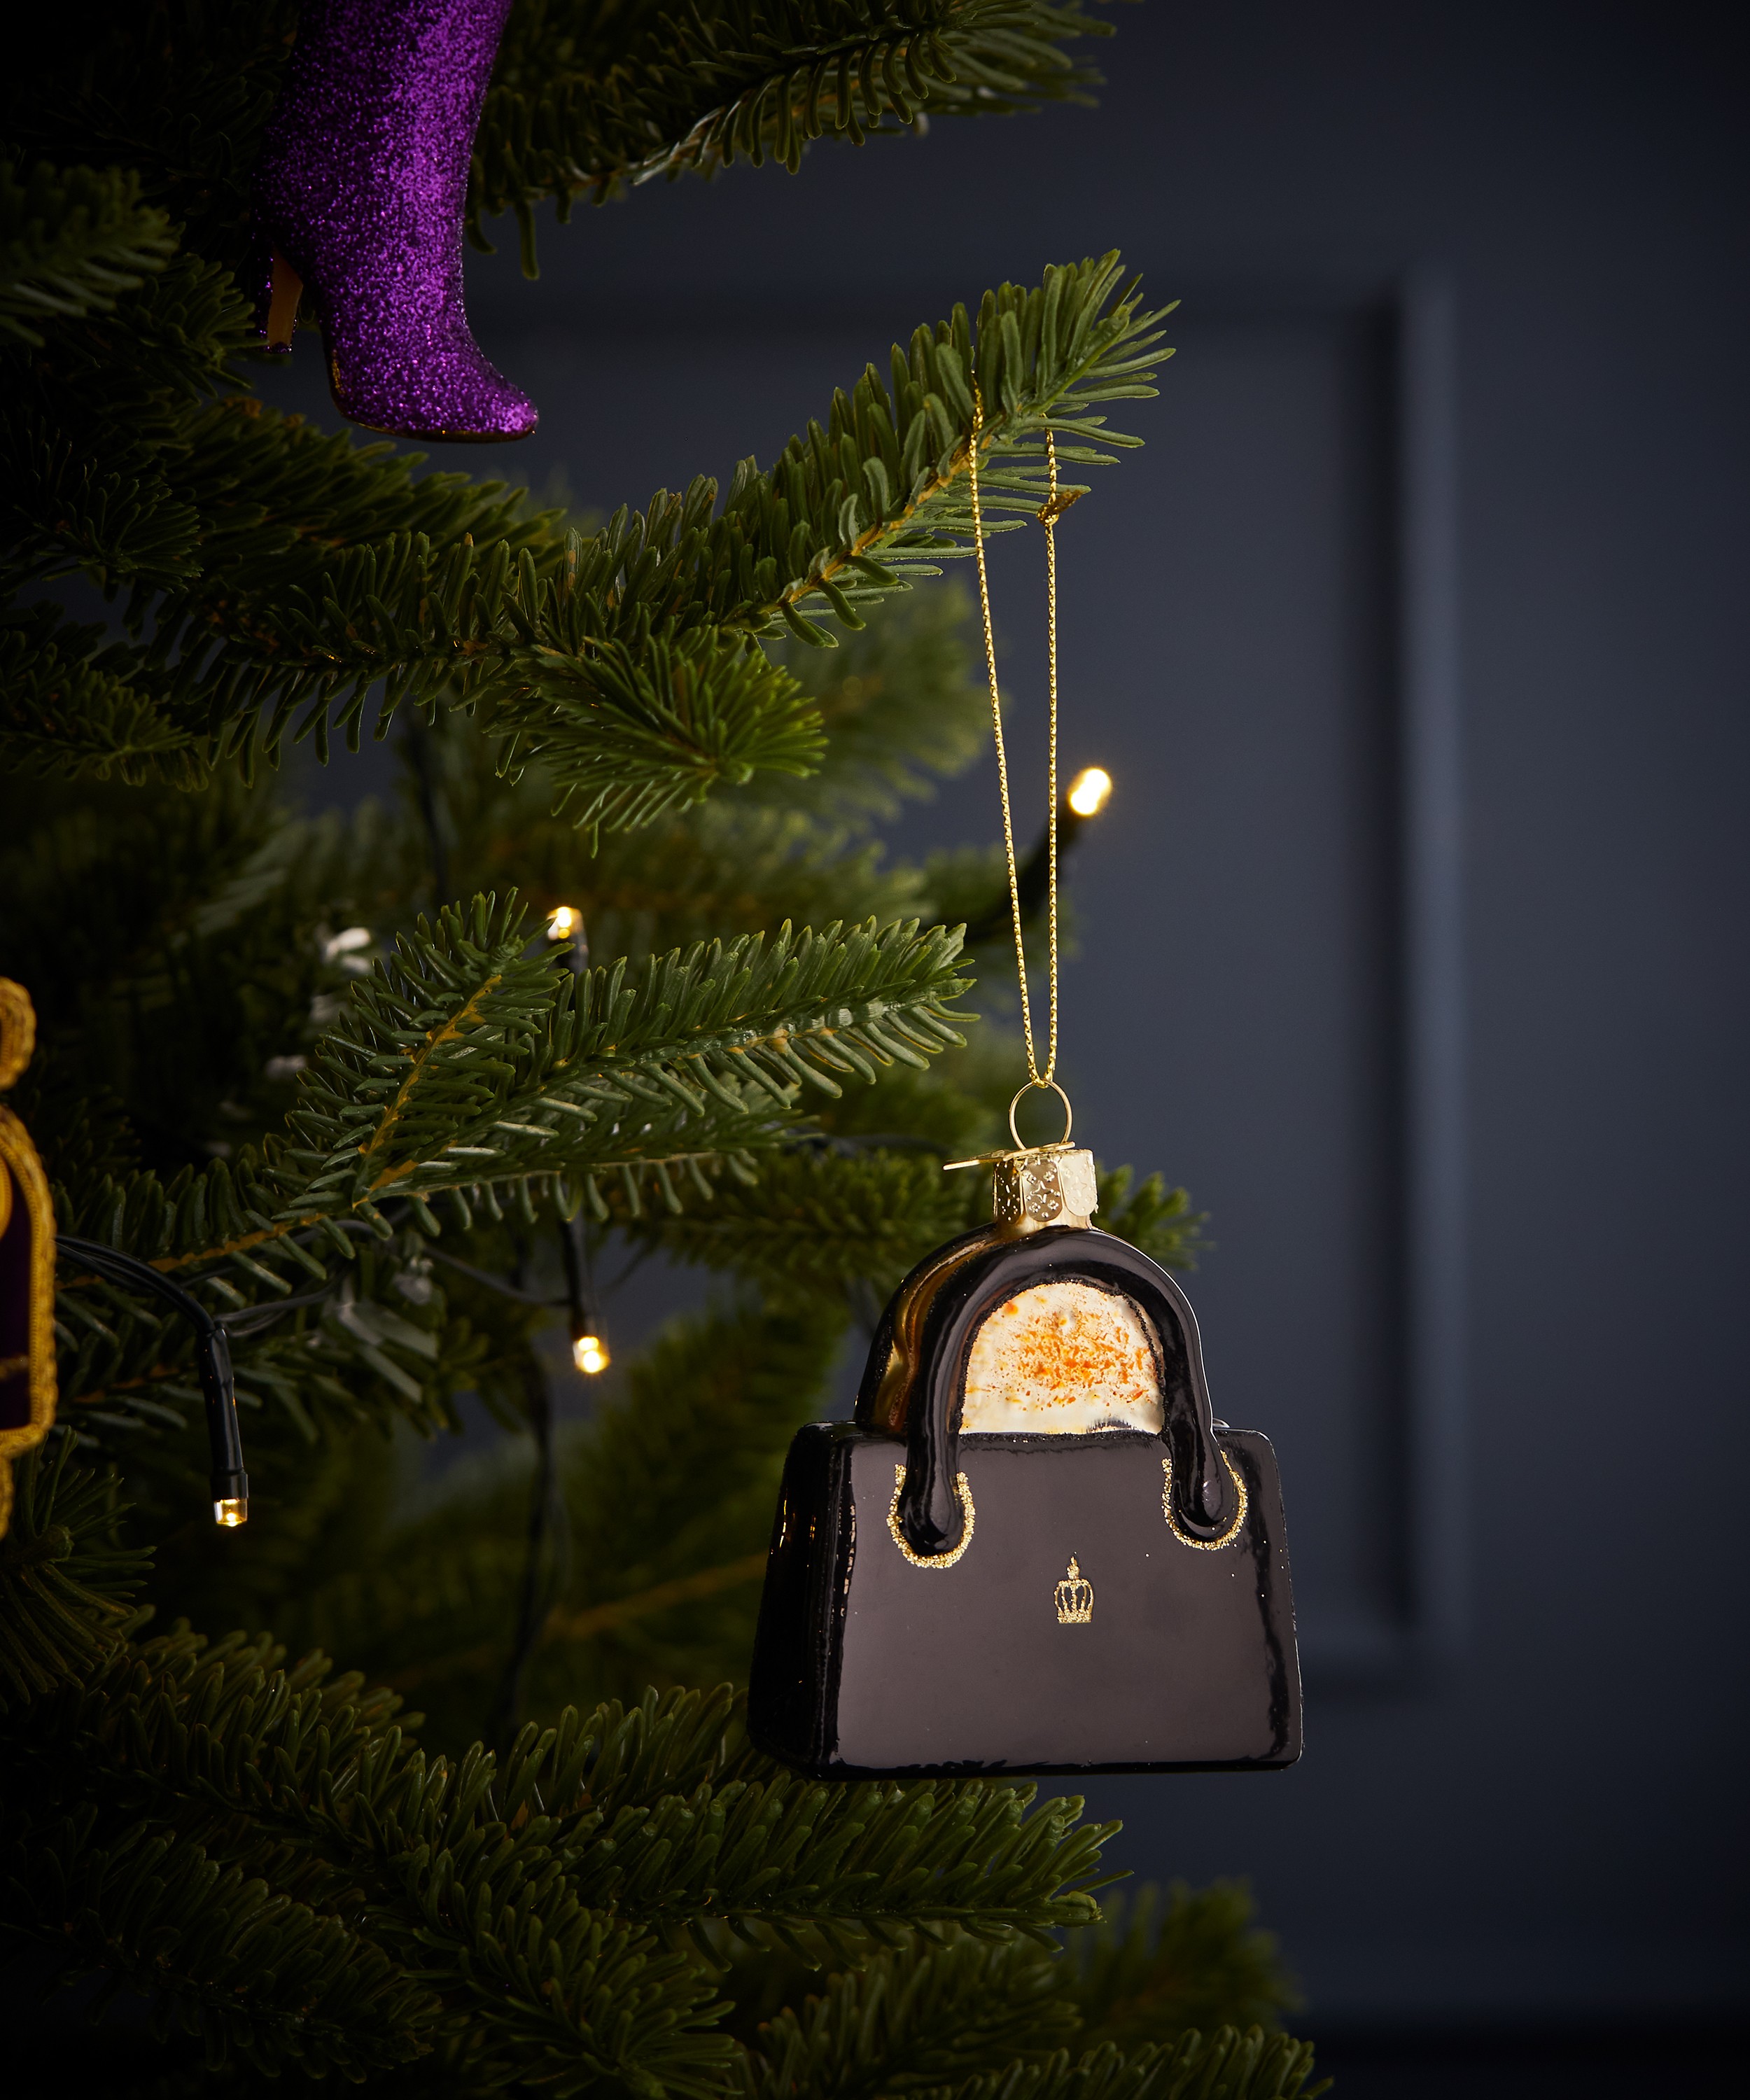 Louis Vuitton Christmas shoe tree! Love it!!